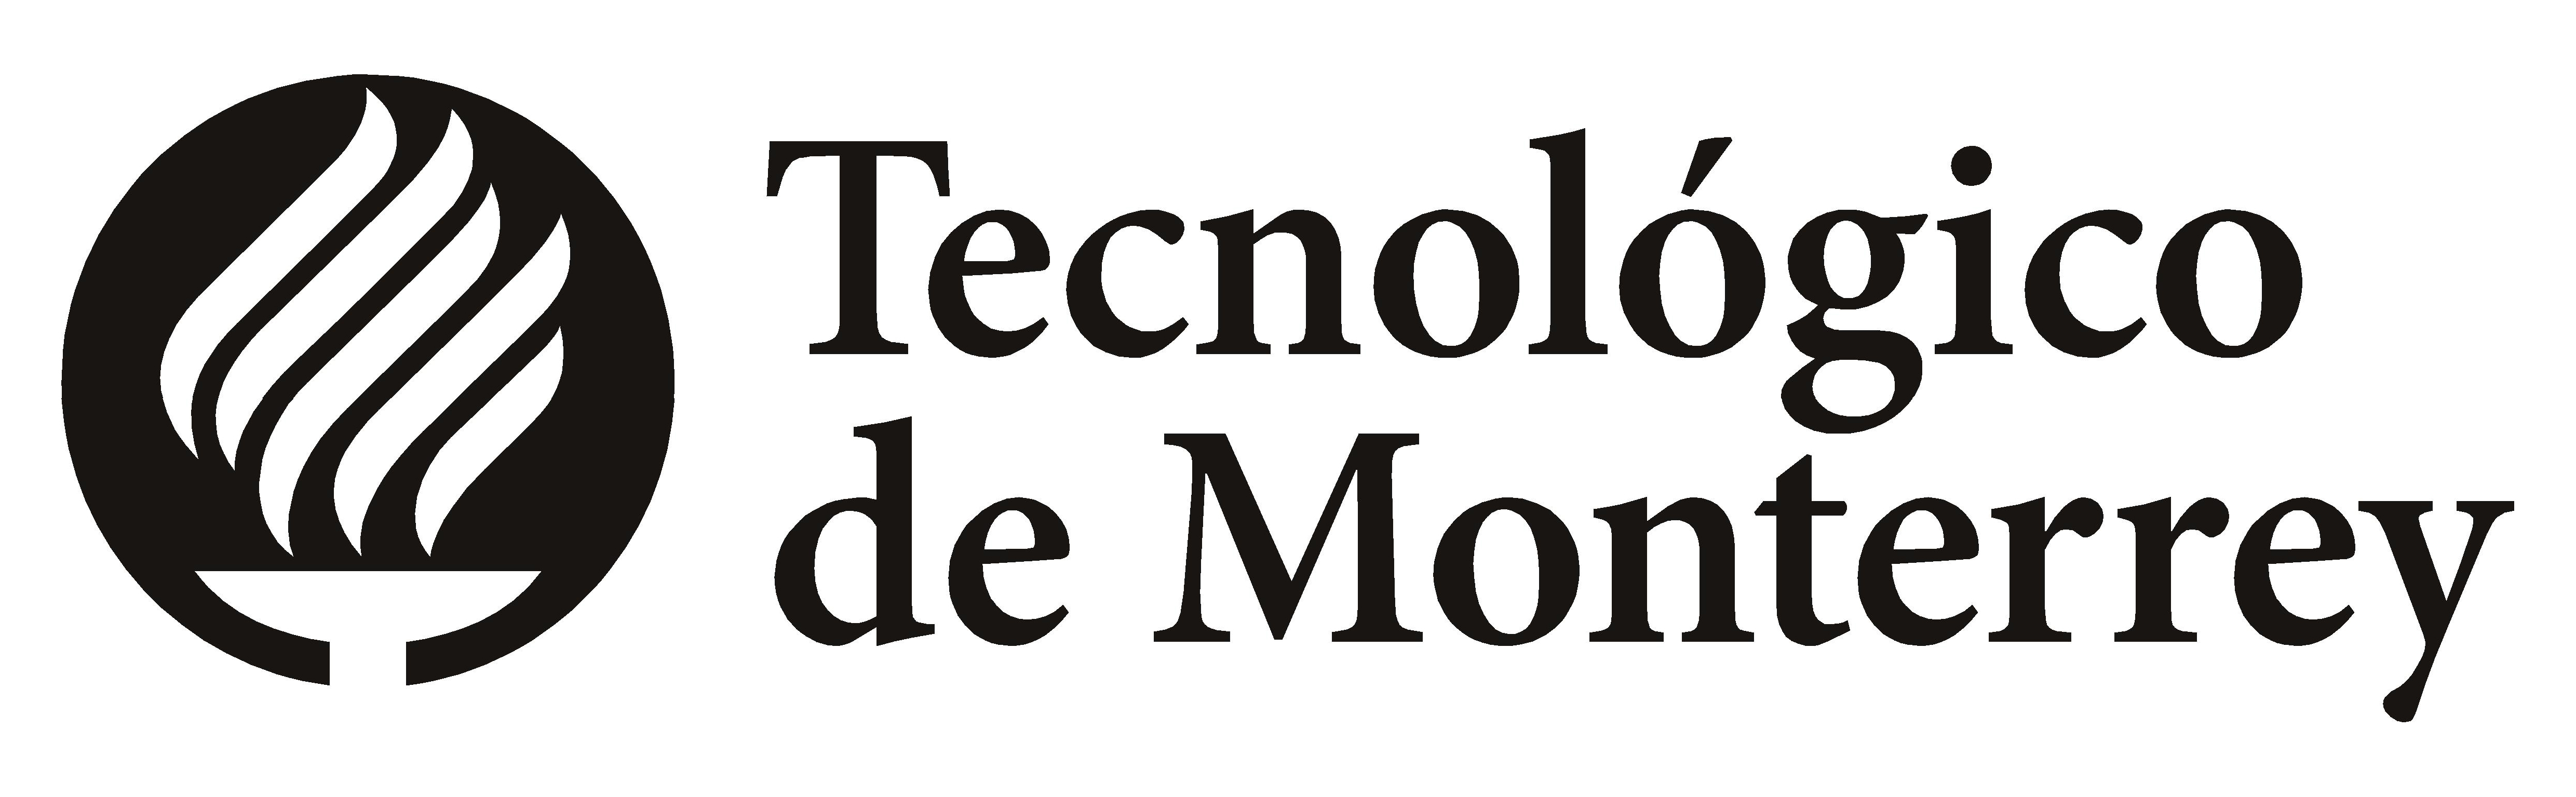 Logo of Tecnológico de Monterrey